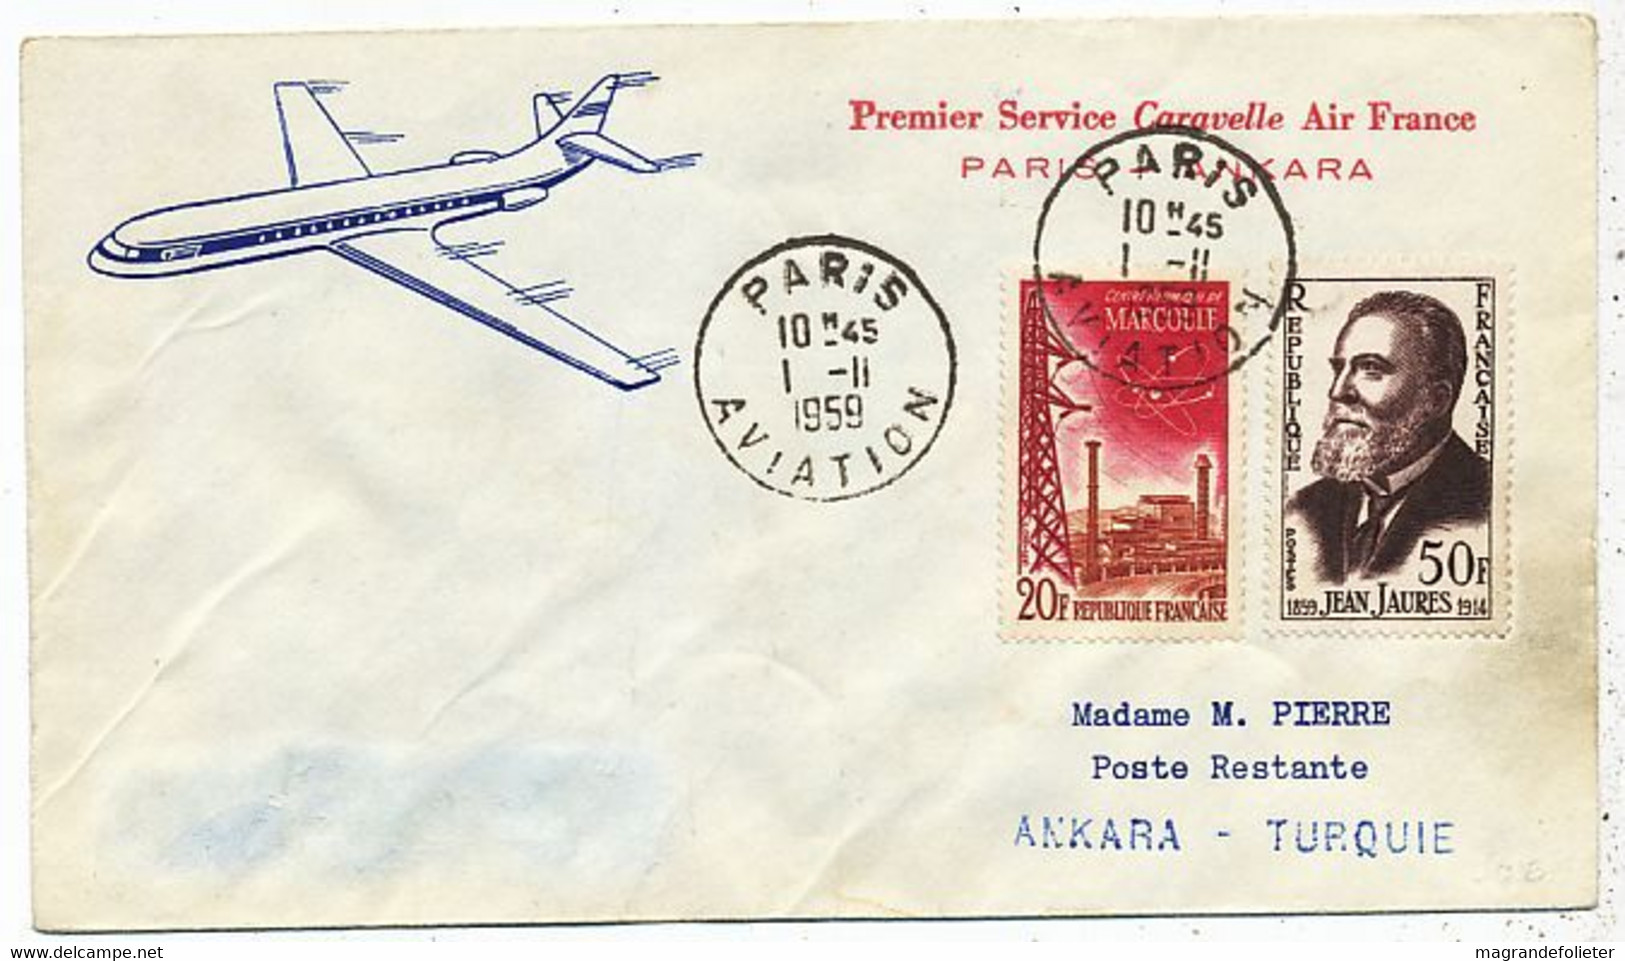 AVION AVIATION AIRLINE AIR FRANCE PREMIER SERVICE CARAVELLE PARIS-ANKARA 1959 - Zertifikate